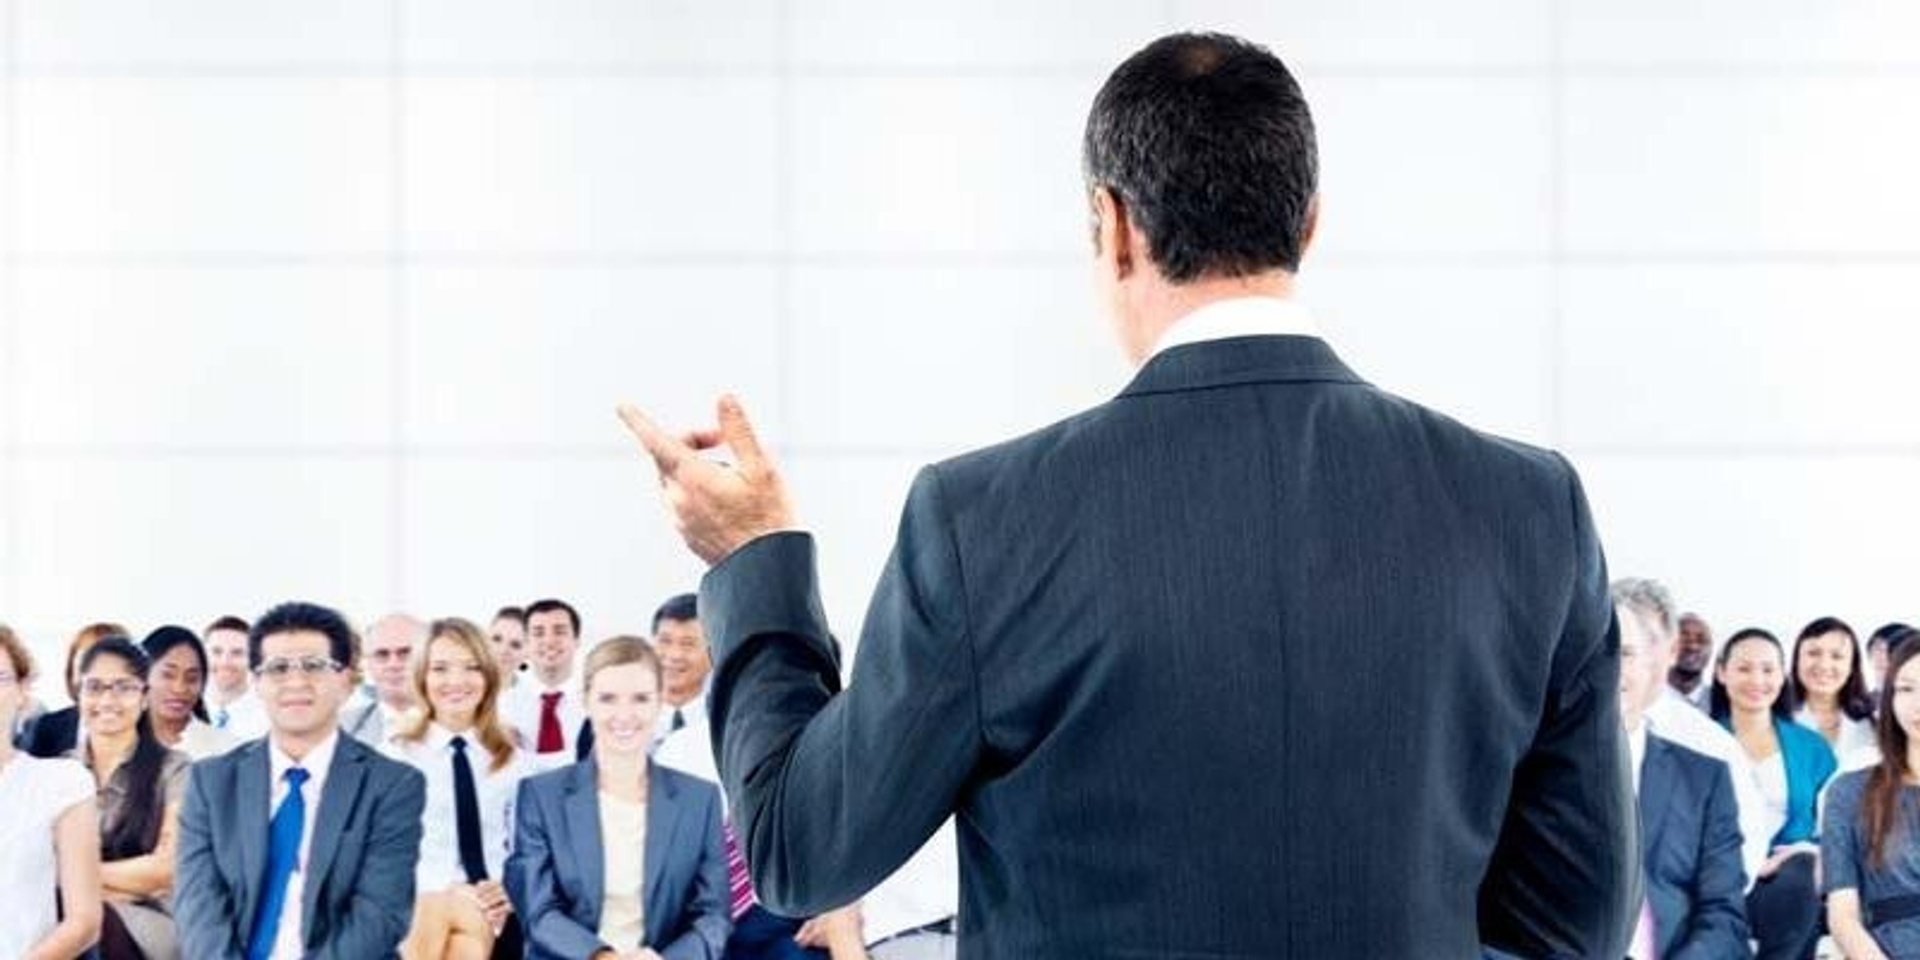 Public Speaking and Interpersonal Skills Training